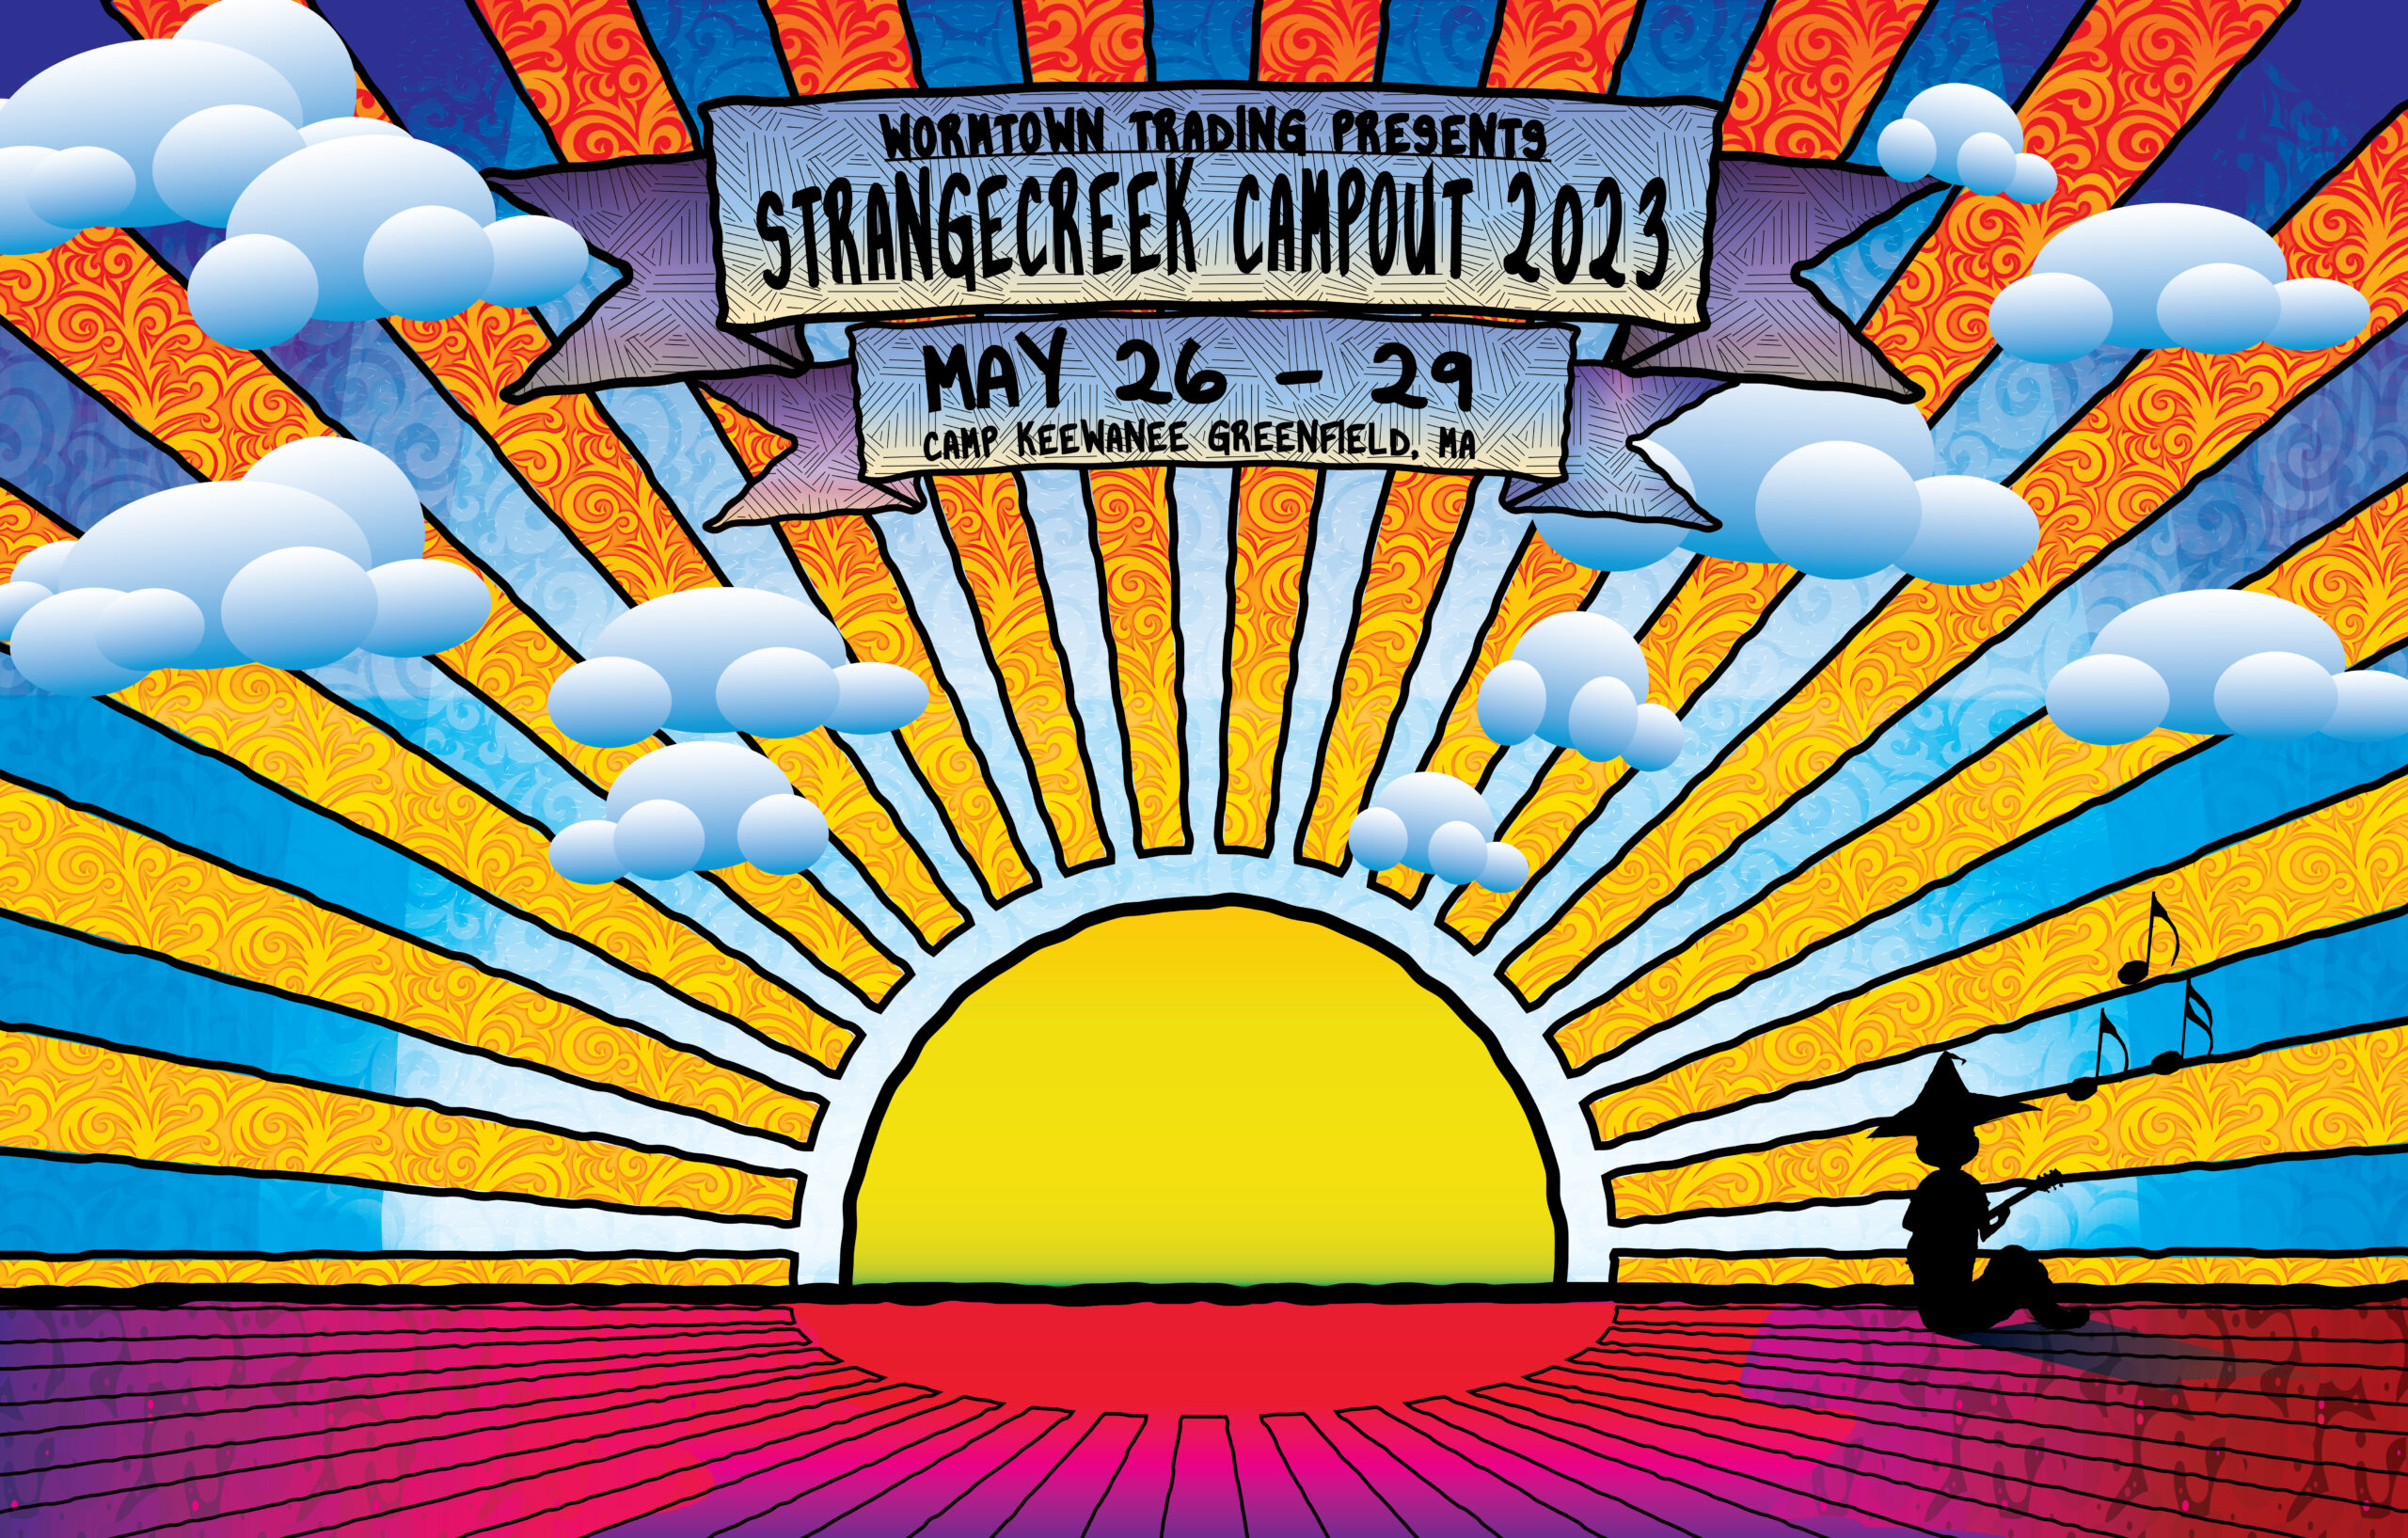 Strangecreek 2023 lineup announced Live Music News